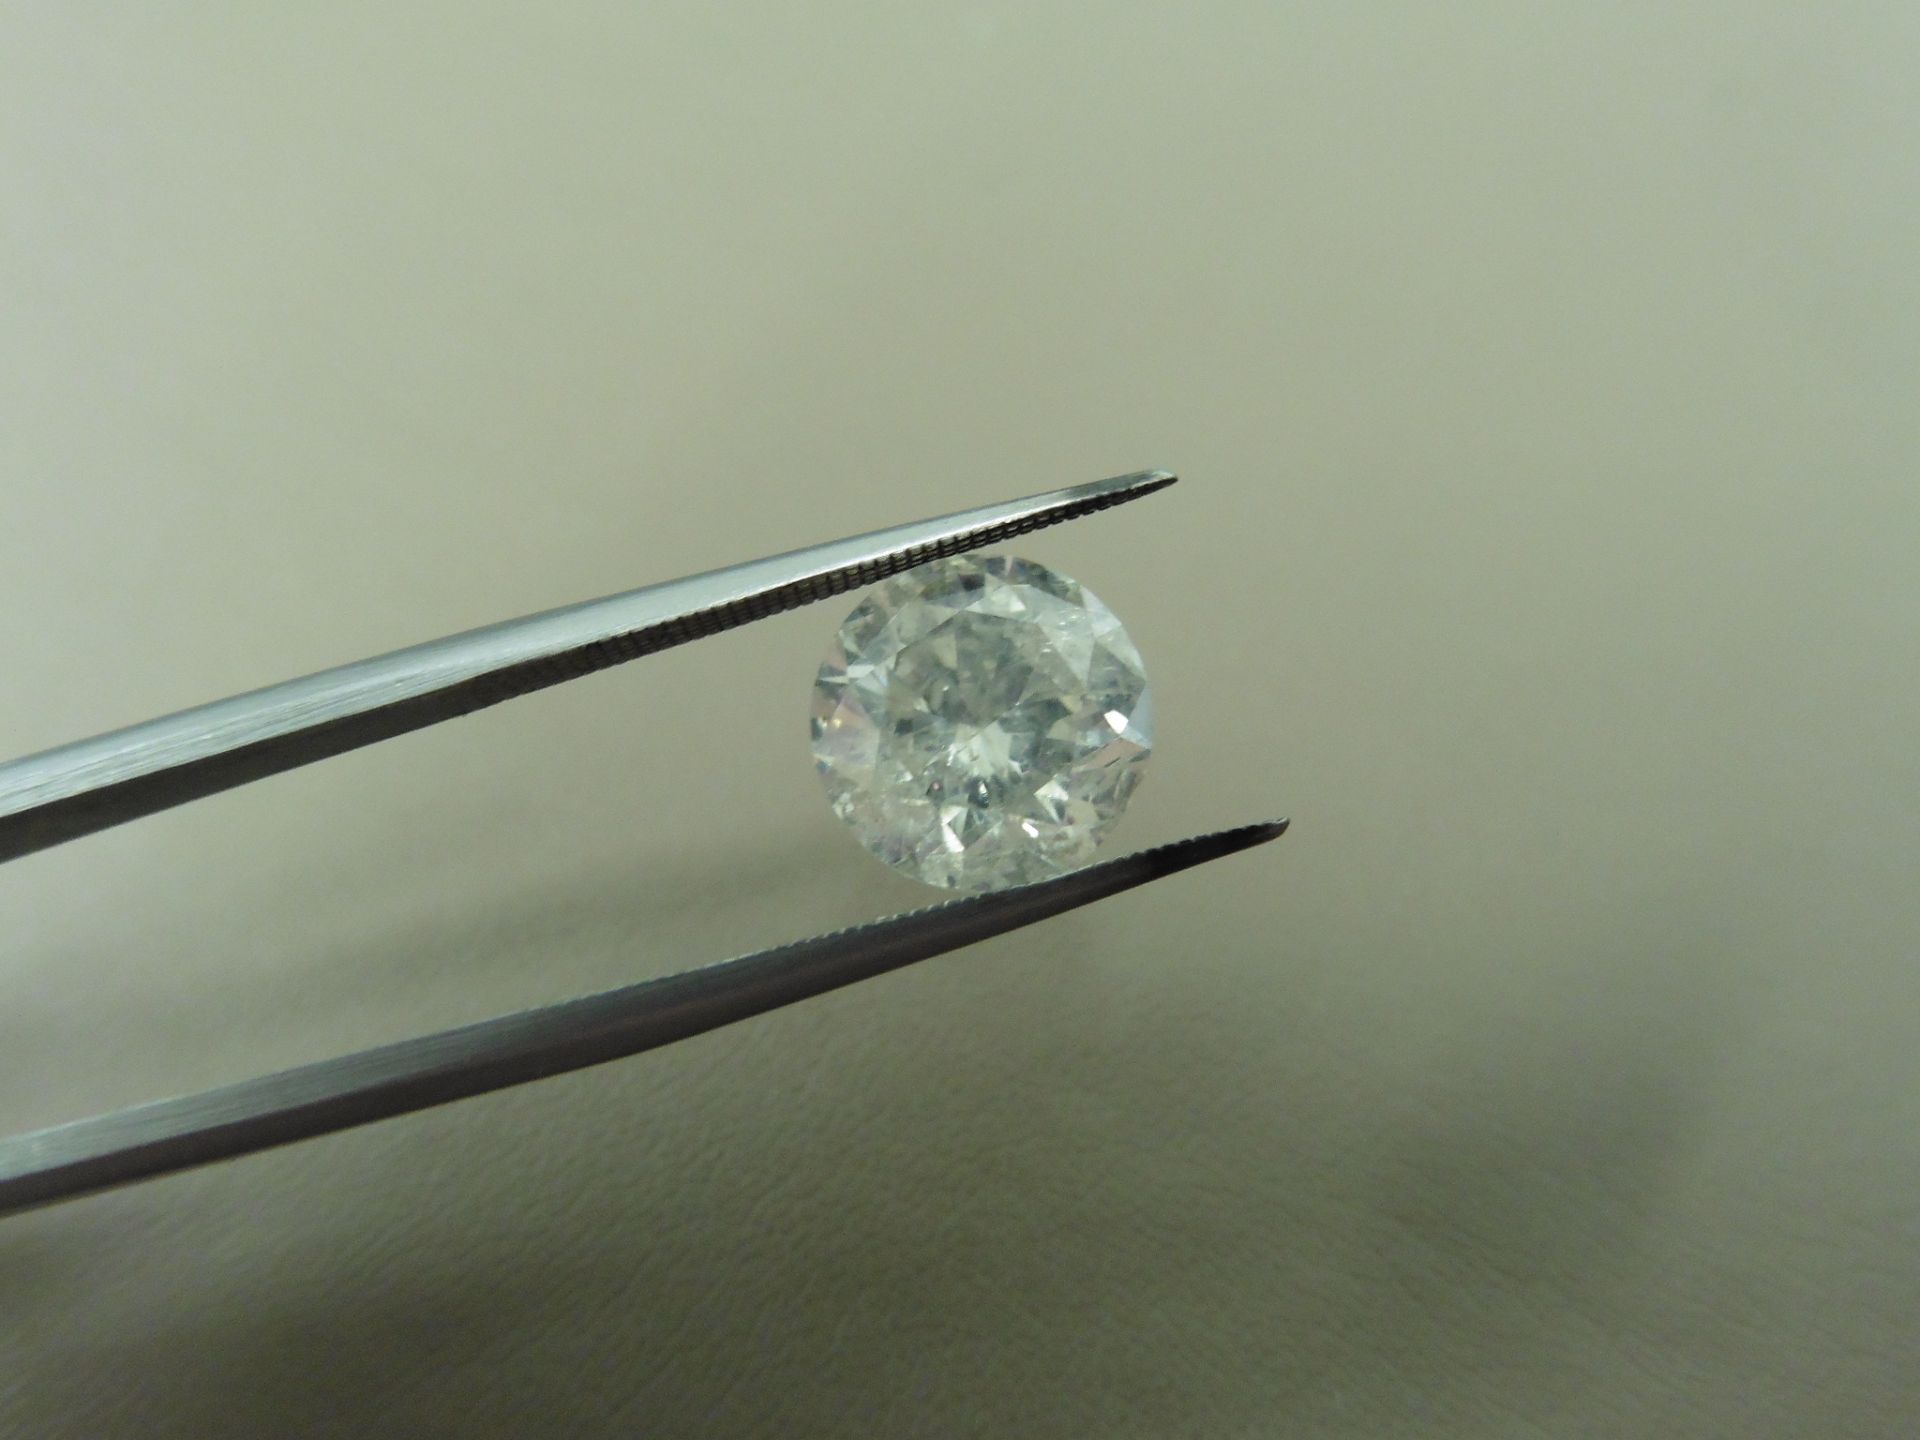 2.26ct enhanced brilliant cut diamond. F colour and I2 clarity ( enhanced). EGL certification.